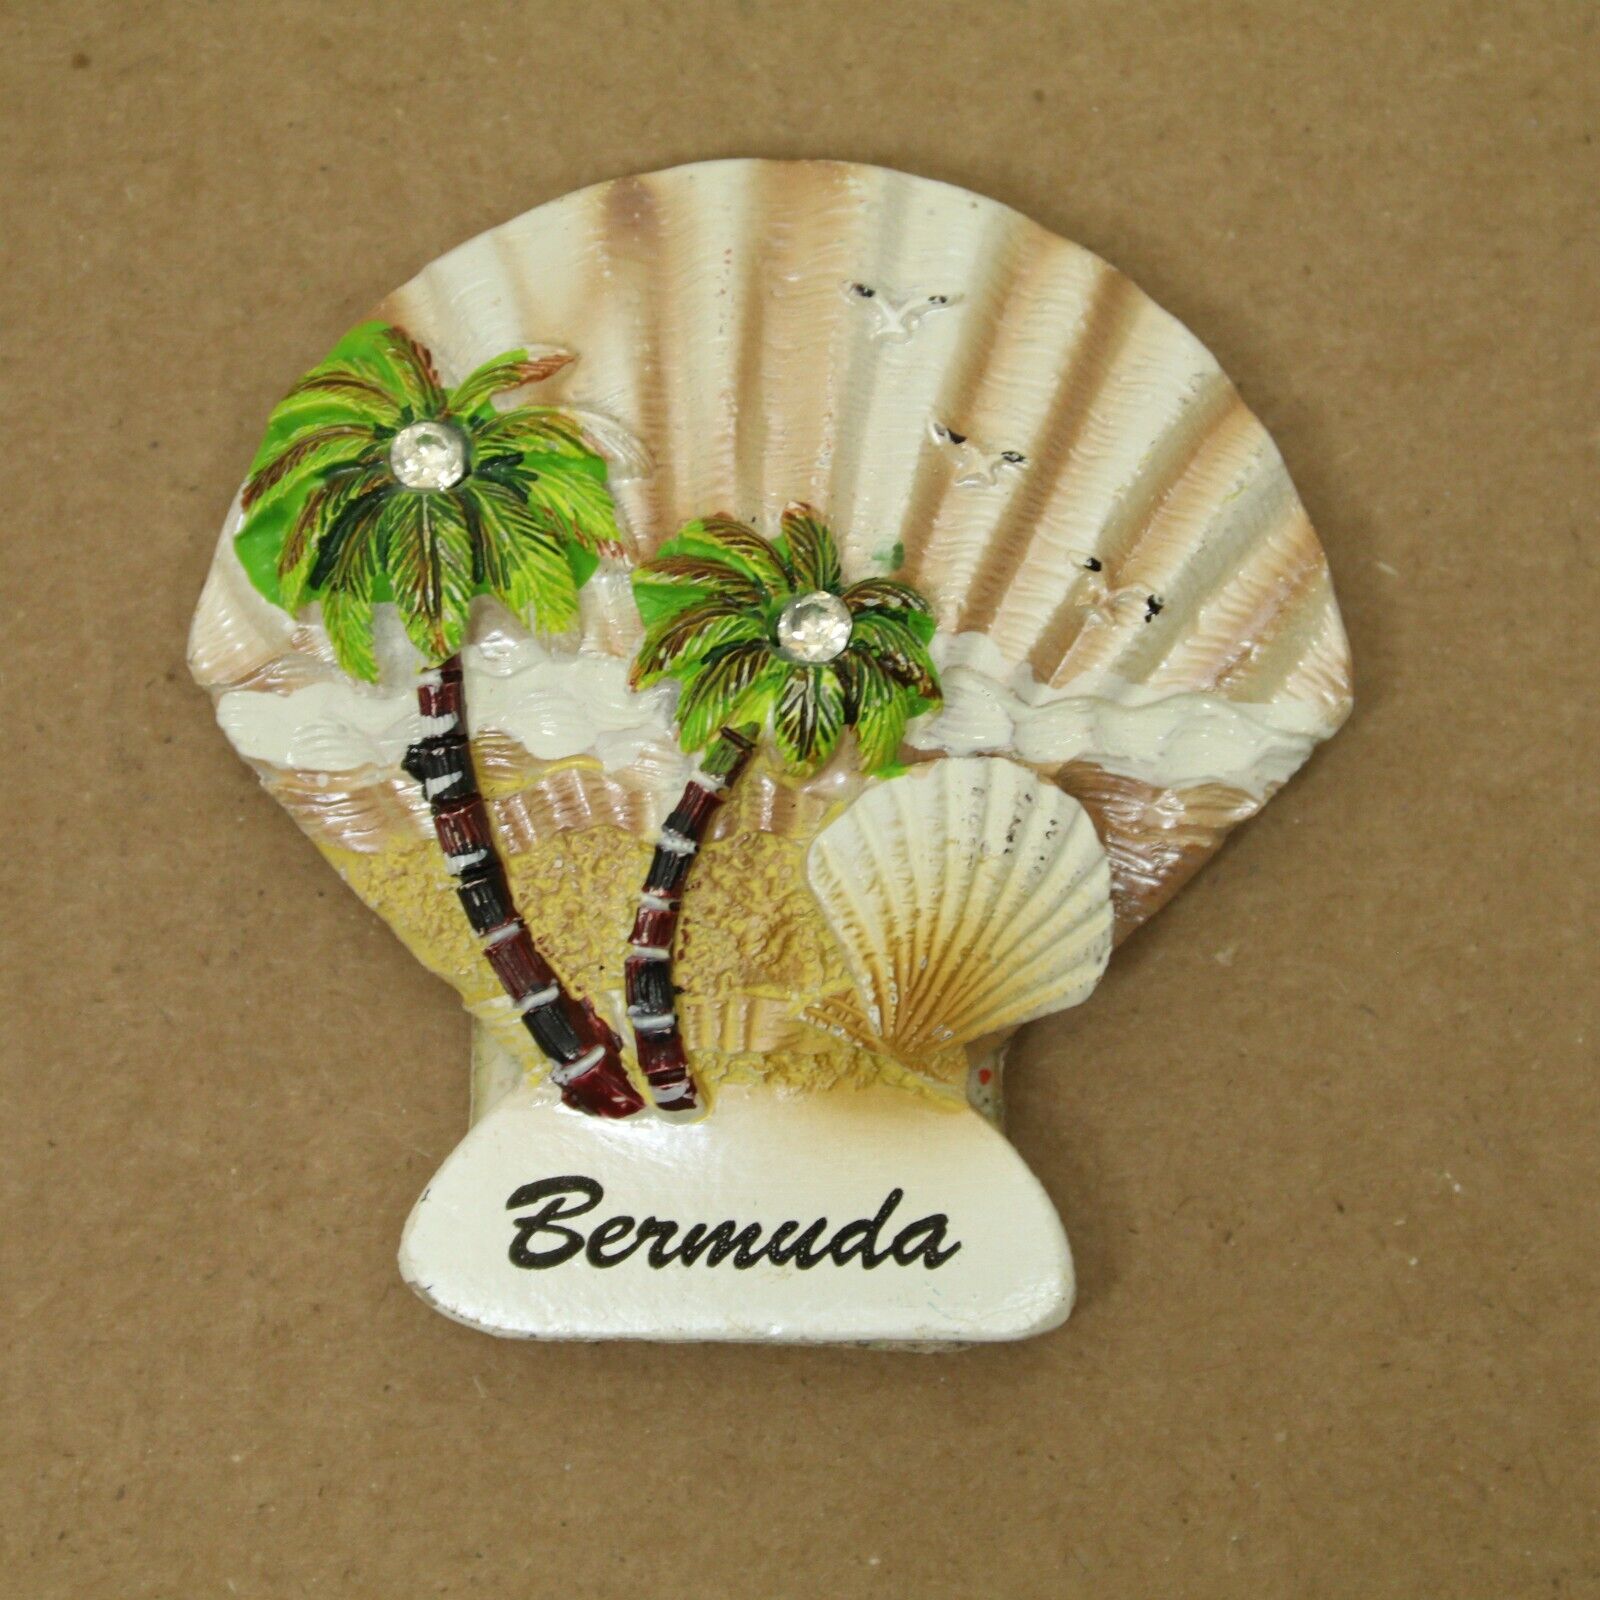 Bermuda Palmtree Beach Sea Shell  3D Magnet Souvenir Refrigerator